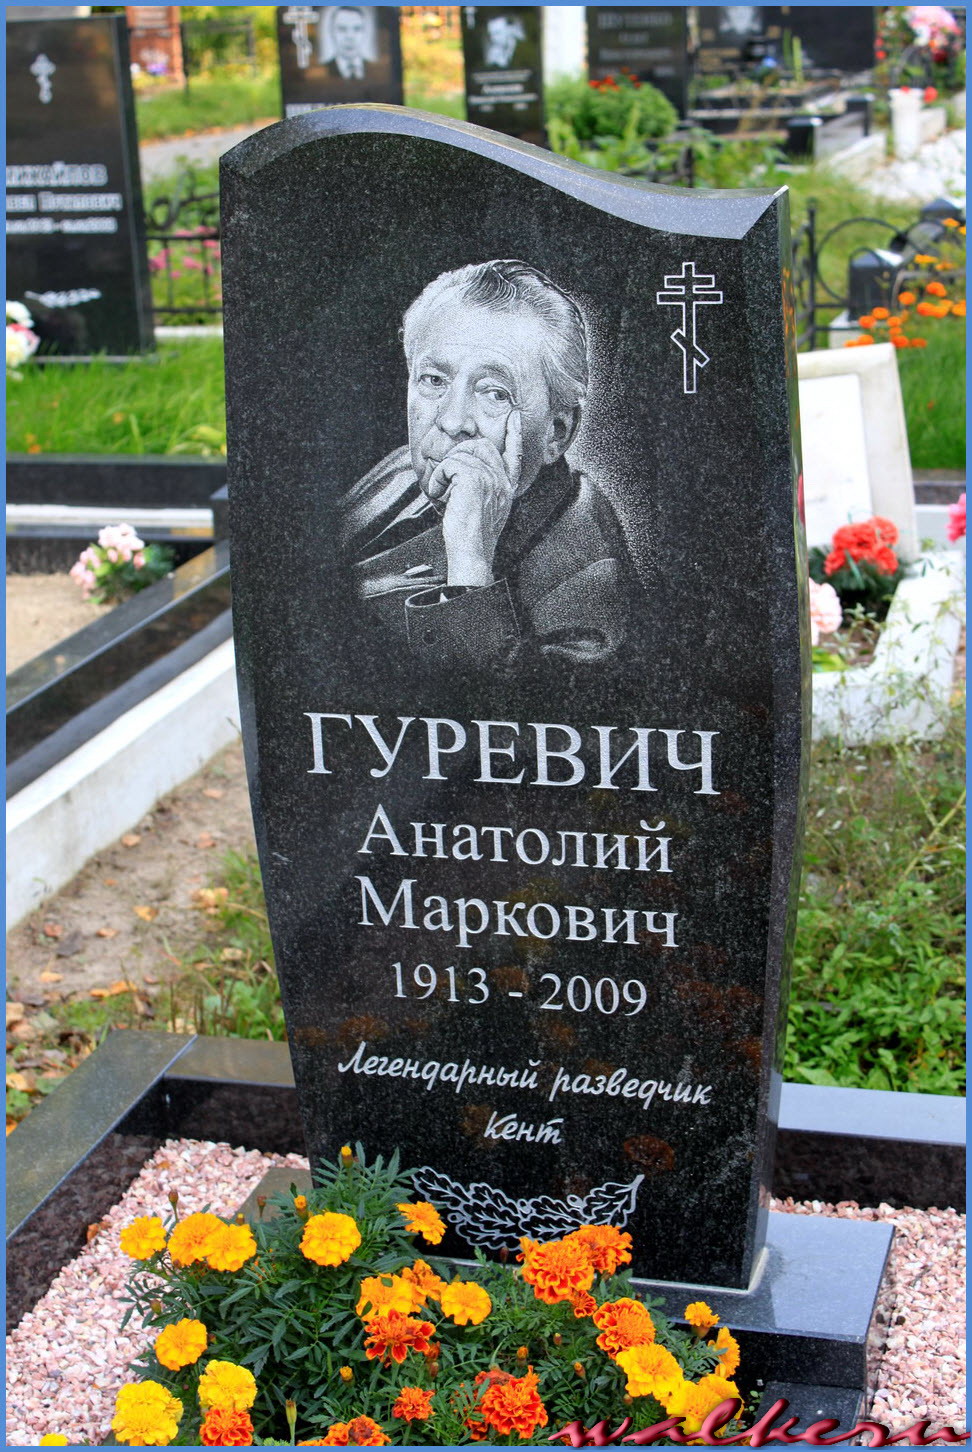 Могила Гуревич А.М. на Богословском кладбище